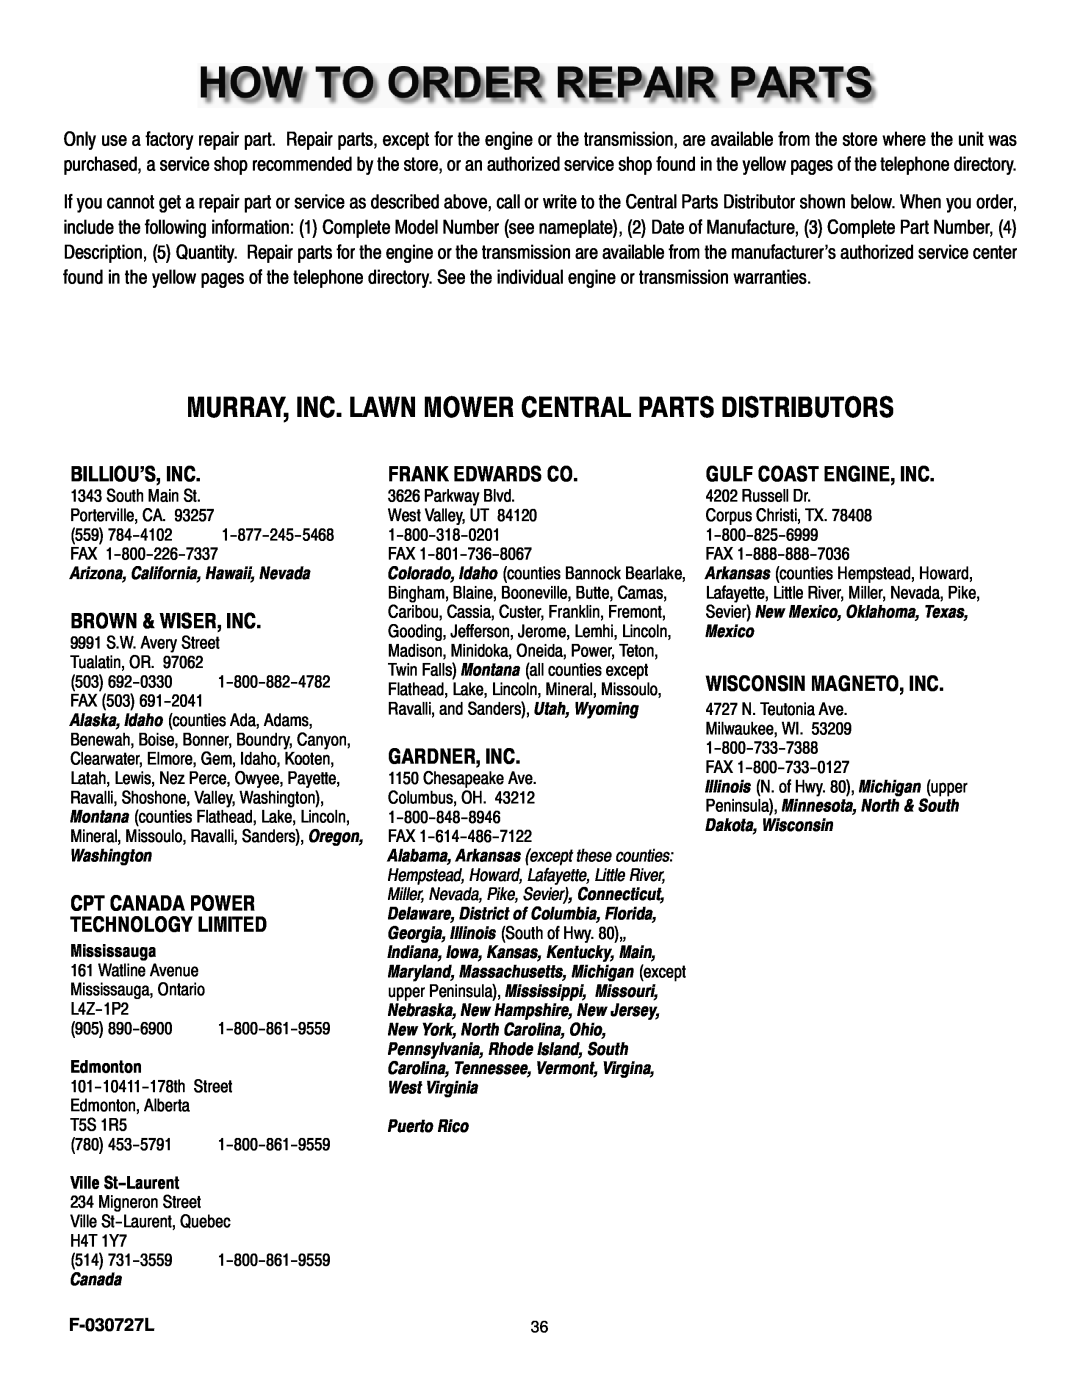 Murray 465600x8A Murray, Inc. Lawn Mower Central Parts Distributors, Billiou’S, Inc, Brown & Wiser, Inc, Frank Edwards Co 